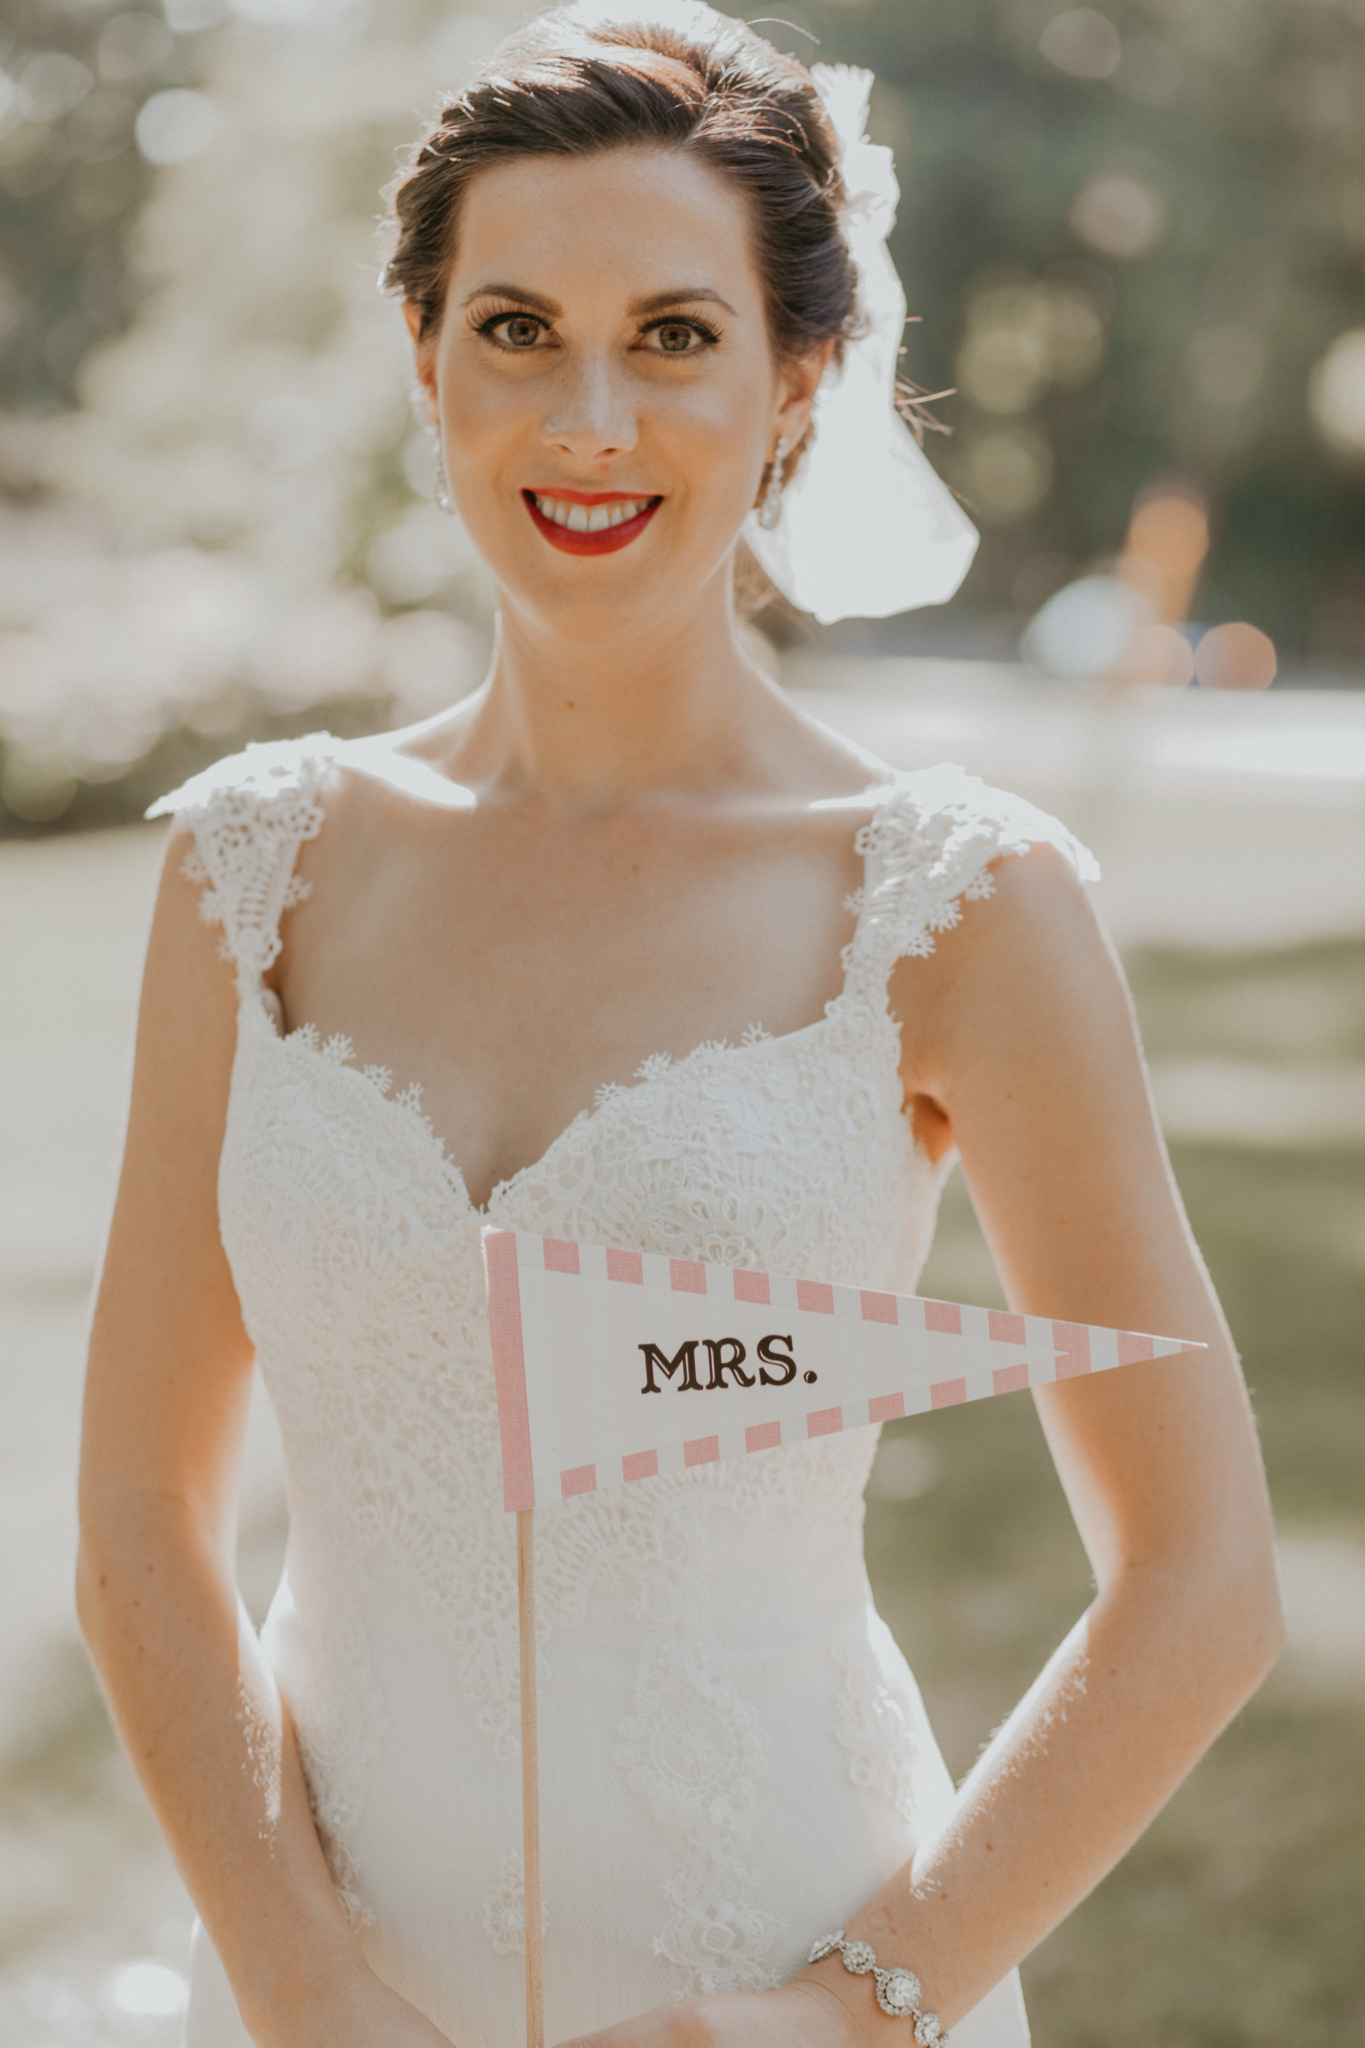 Portrait of bride on wedding day holding "Mrs" flag